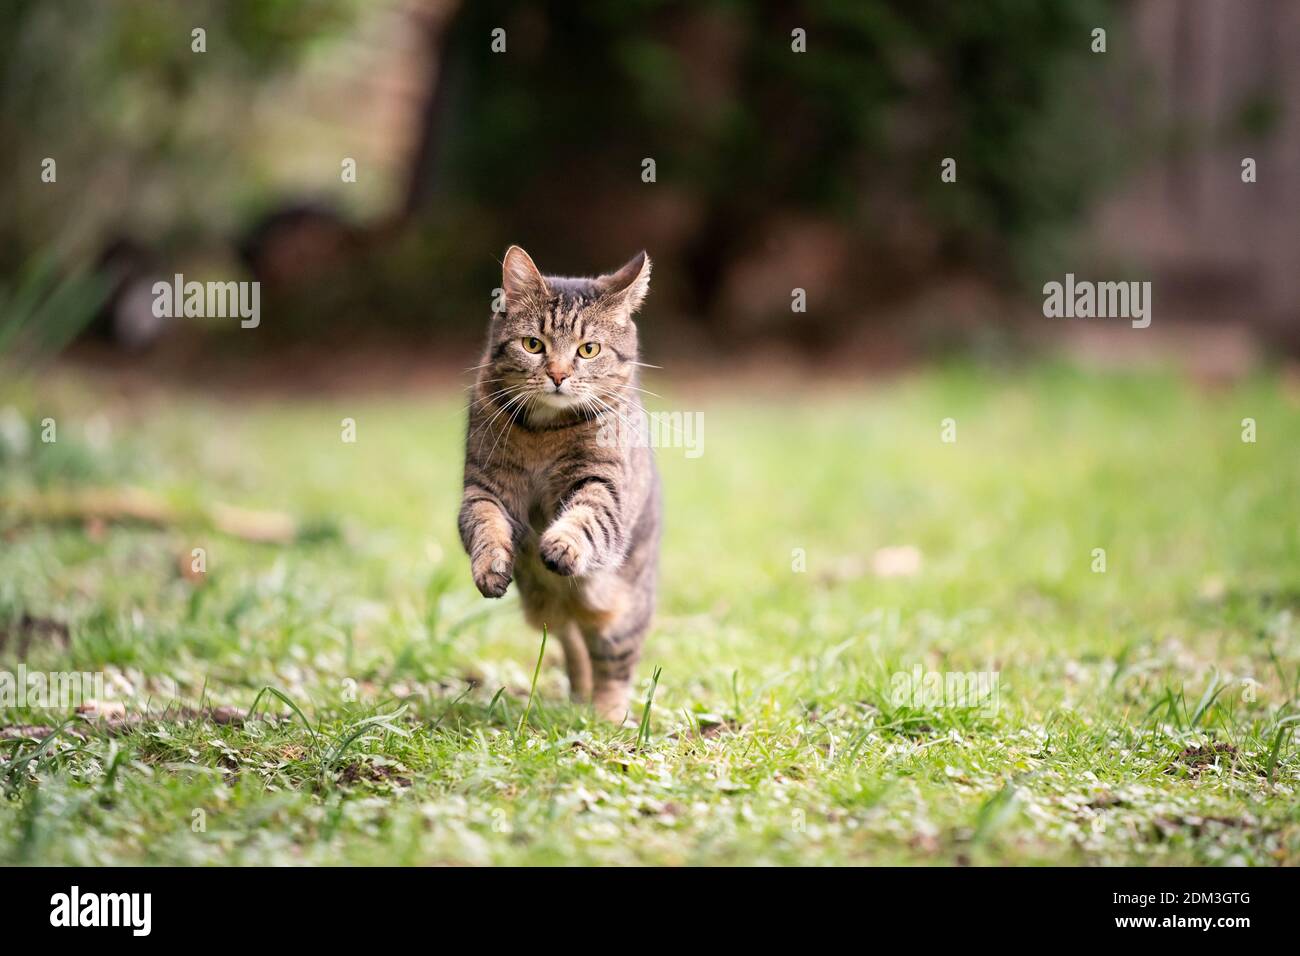 tabby cat looking running towards camera on grass in garden Stock Photo